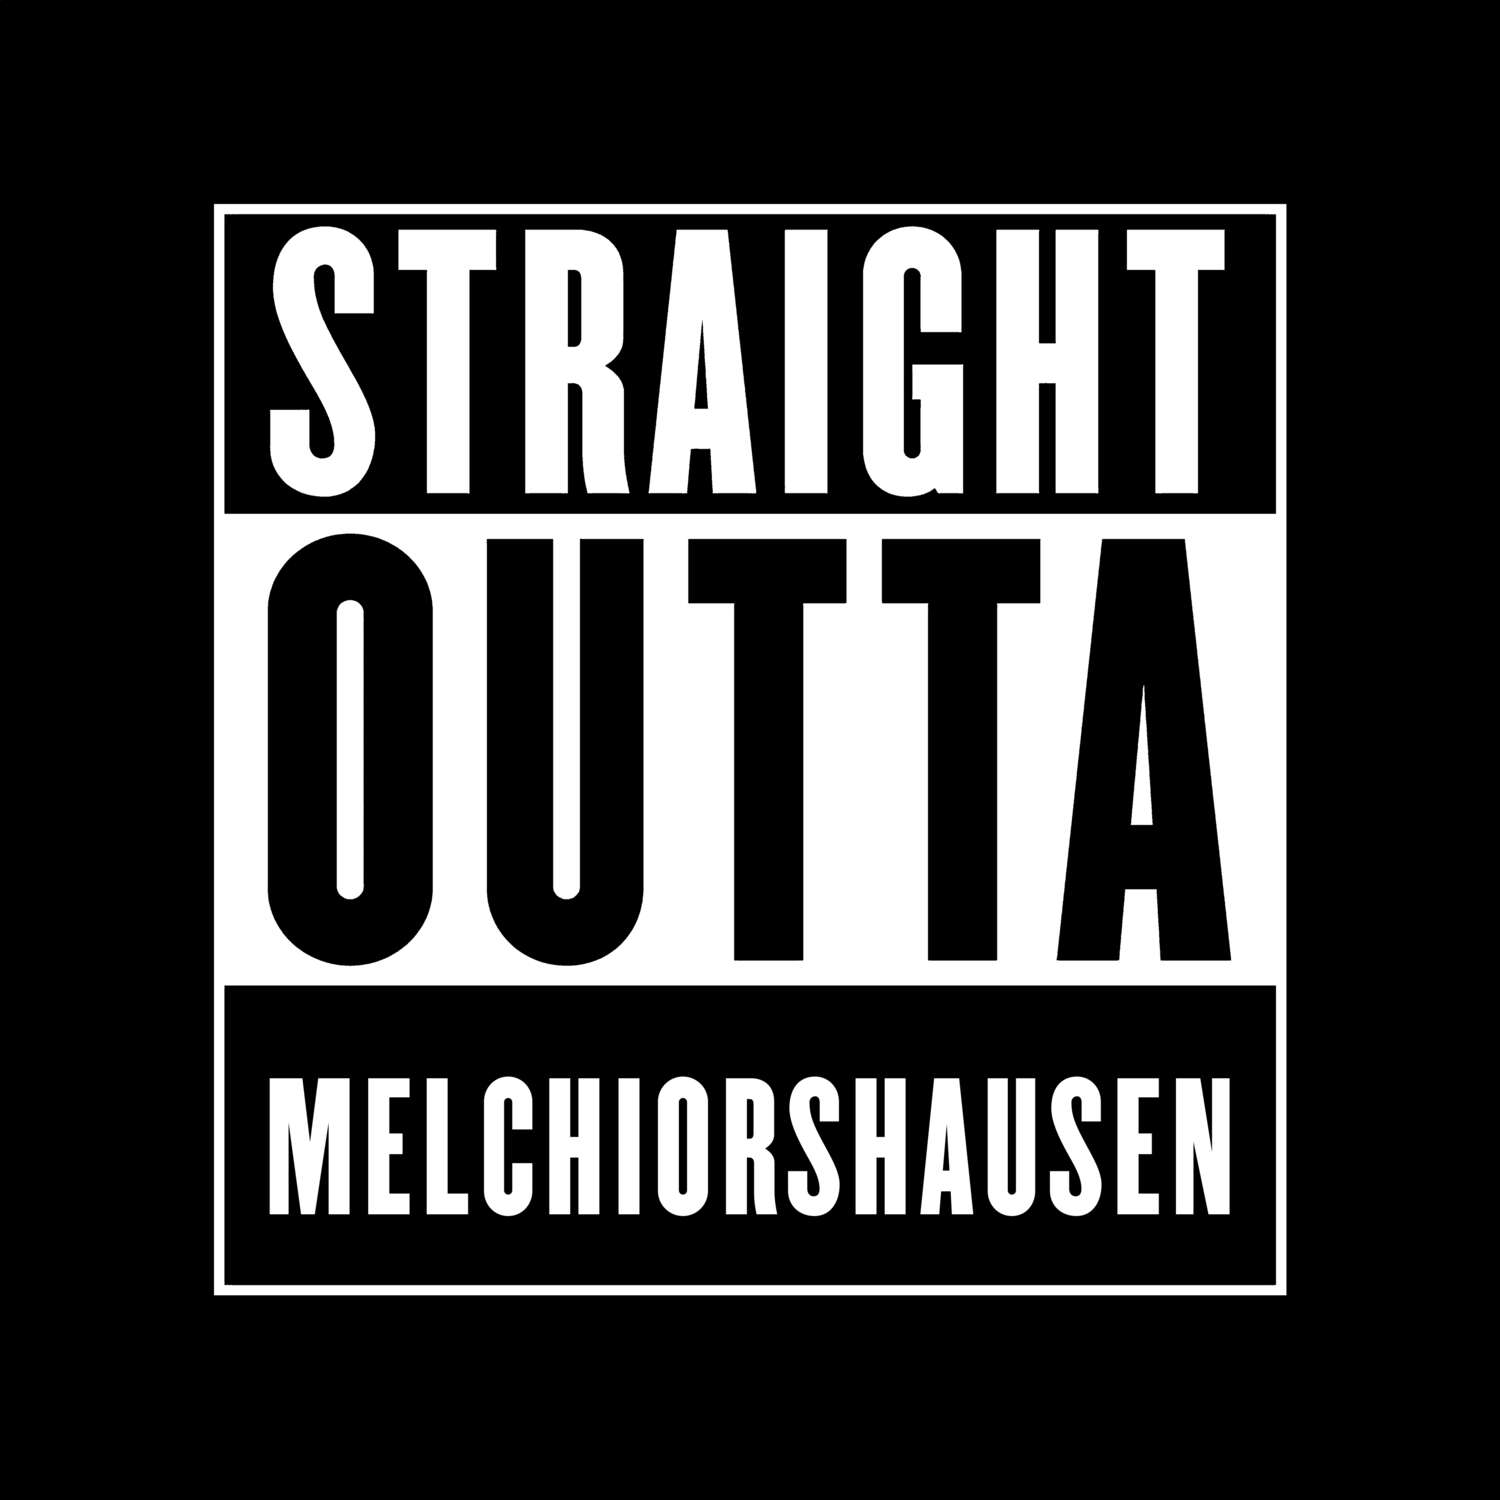 Melchiorshausen T-Shirt »Straight Outta«